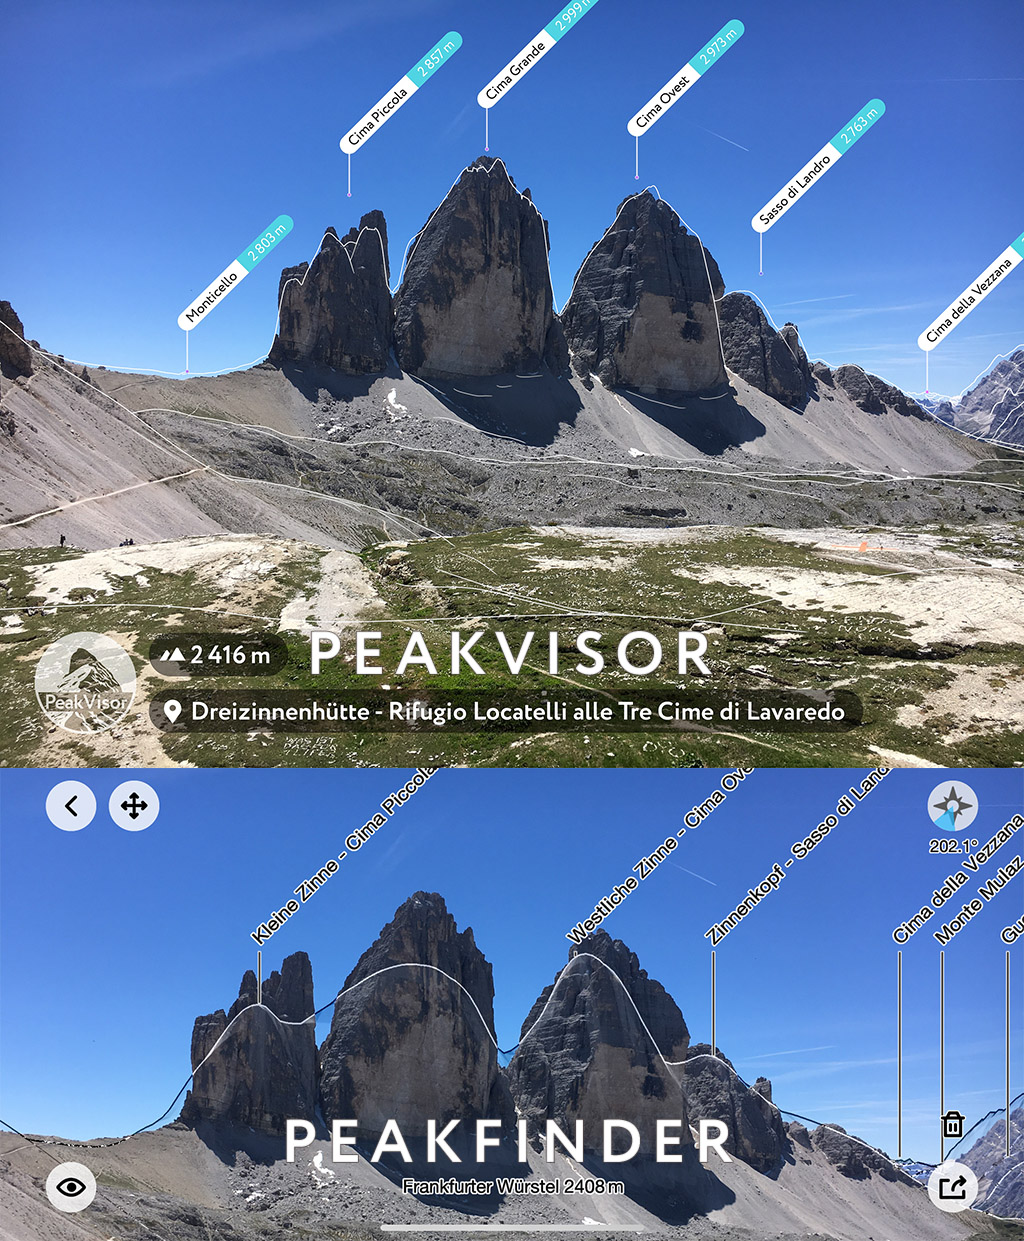 Principales diferencias entre PeakFinder y PeakVisor